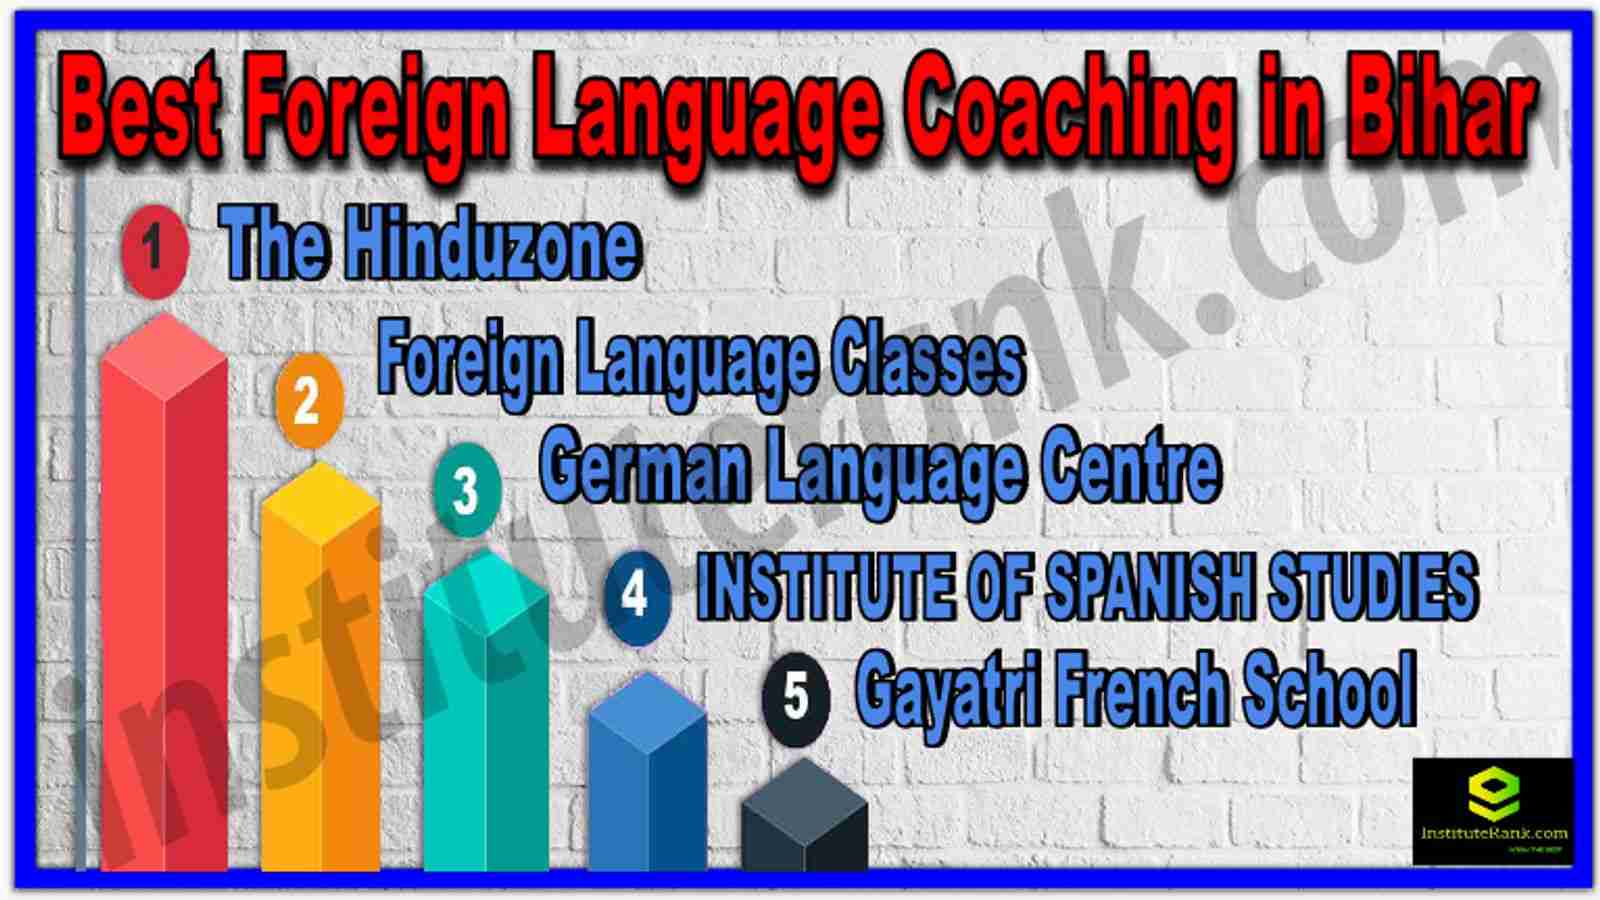 Best Foreign Language Coaching in Bihar